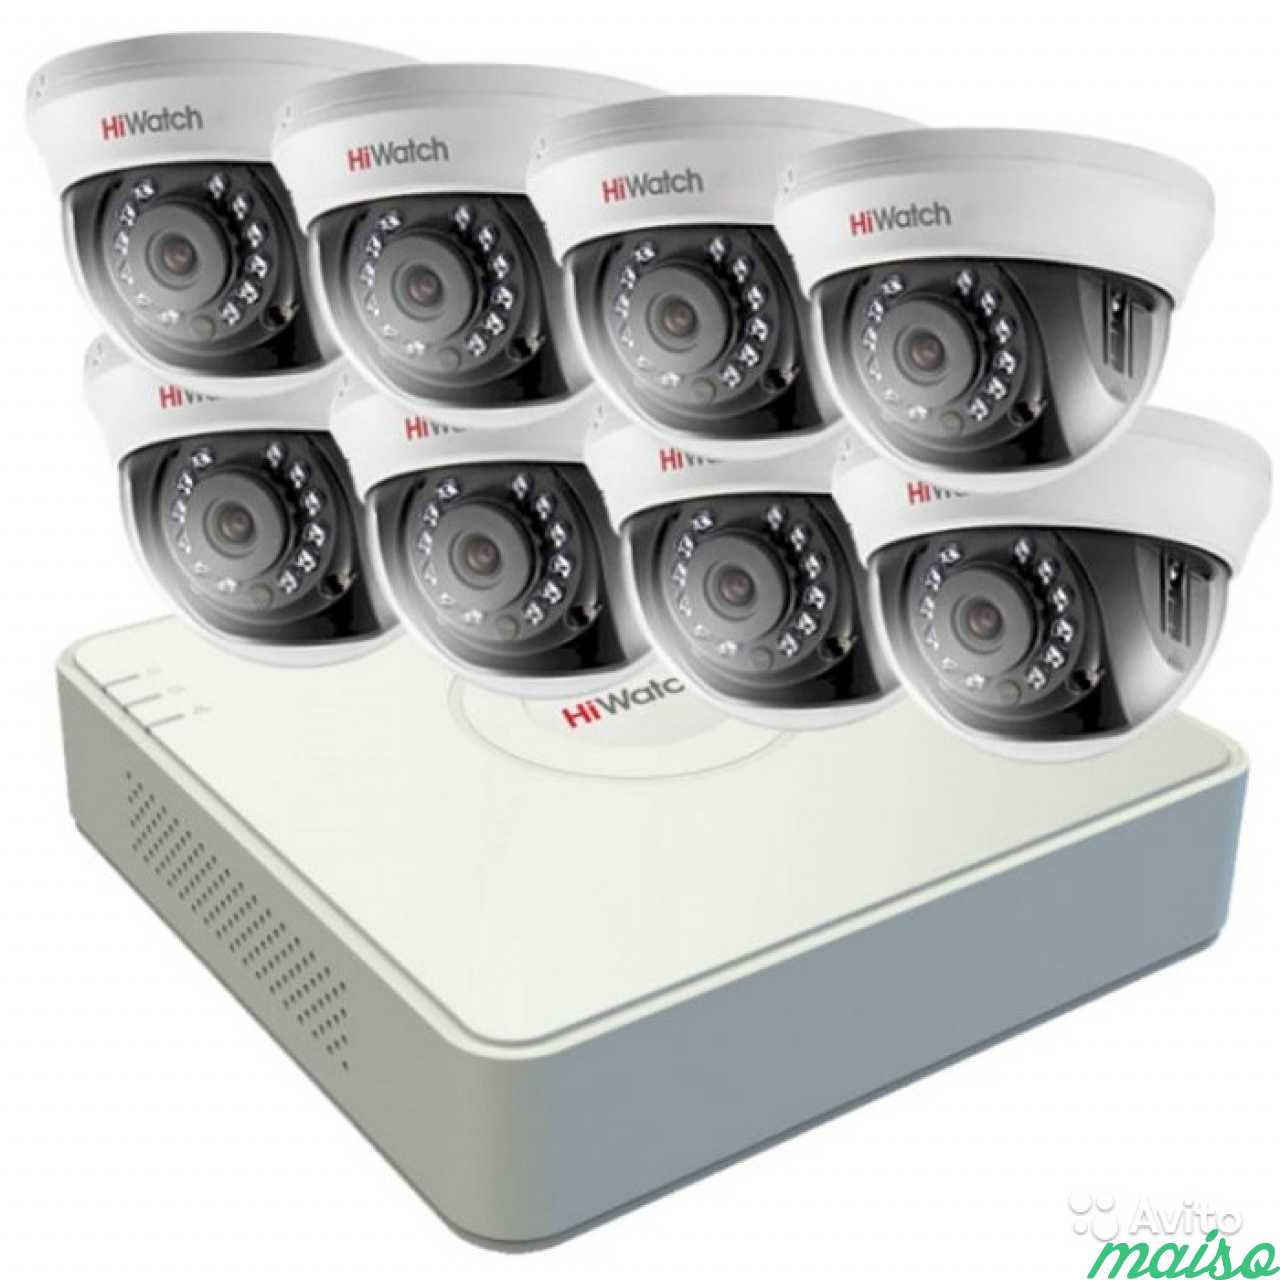 Hiwatch регистратор 8. Комплект HIWATCH t209p. Комплект видеонаблюдения HIWATCH IP 4. Комплект видеонаблюдения Hikvision на 4 камеры IP. Комплект 8 камер HIWATCH.